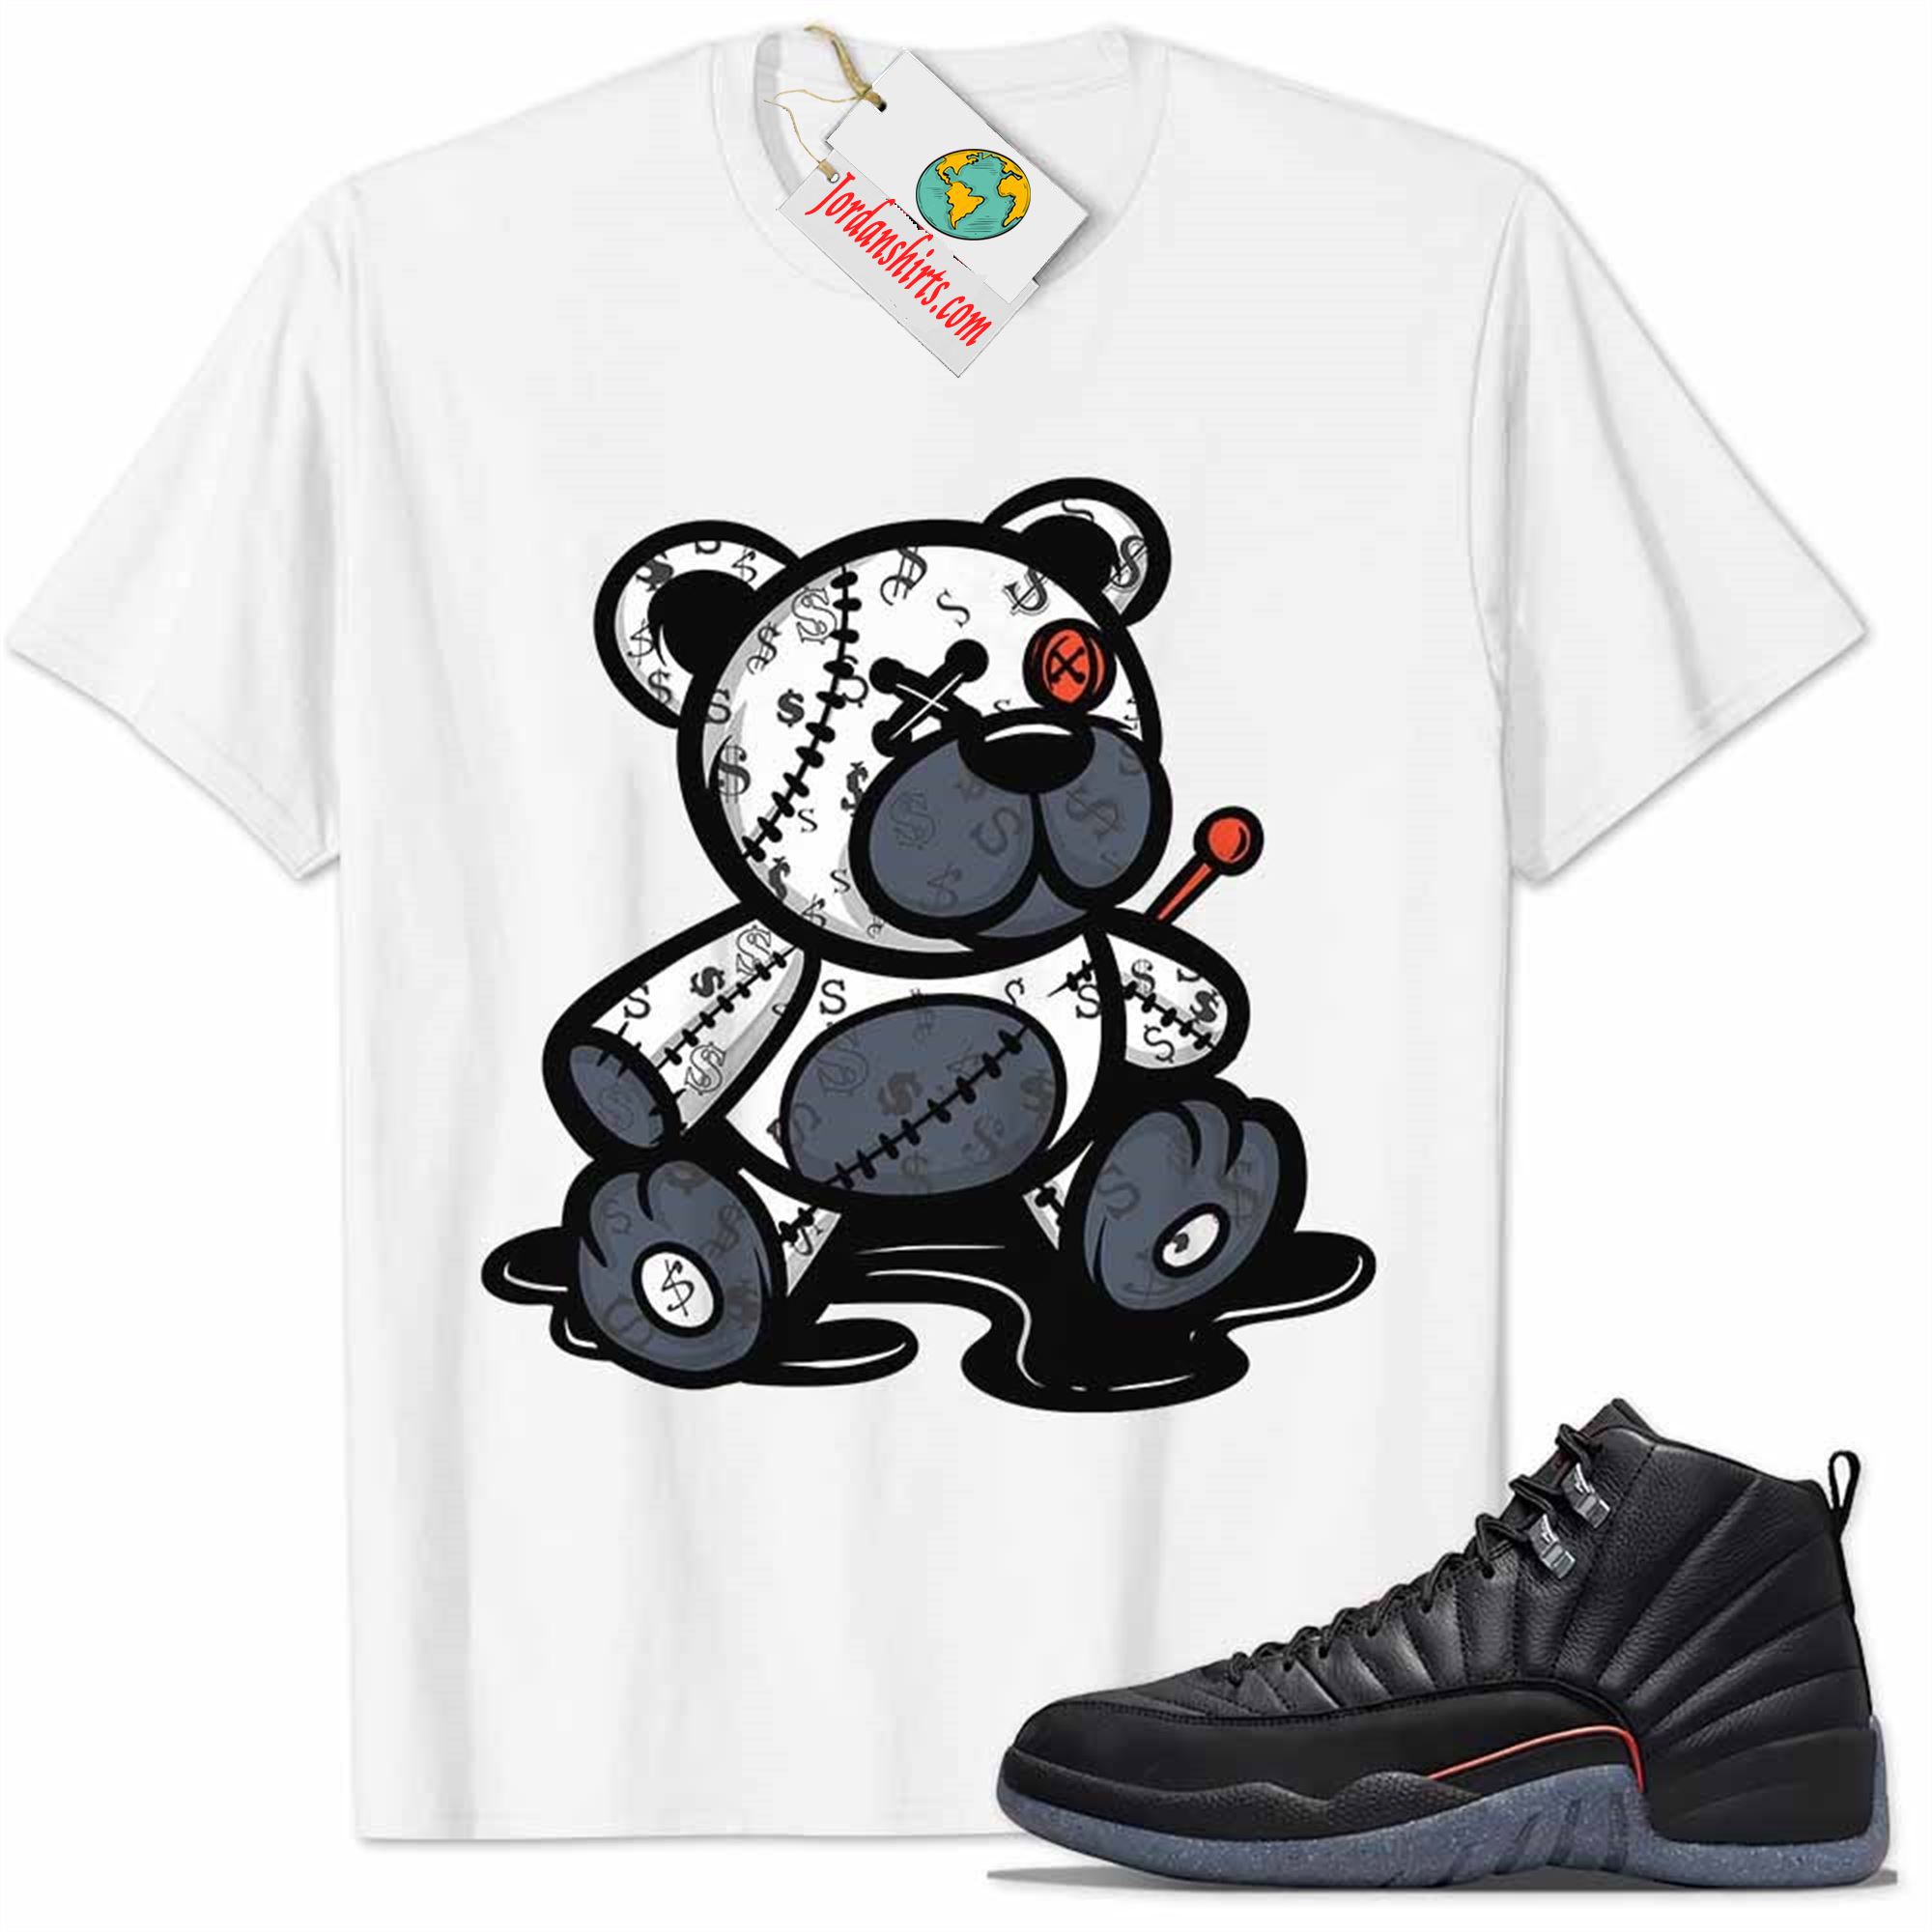 Jordan 12 Shirt, Jordan 12 Utility Grind Shirt Teddy Bear All Money In White Full Size Up To 5xl